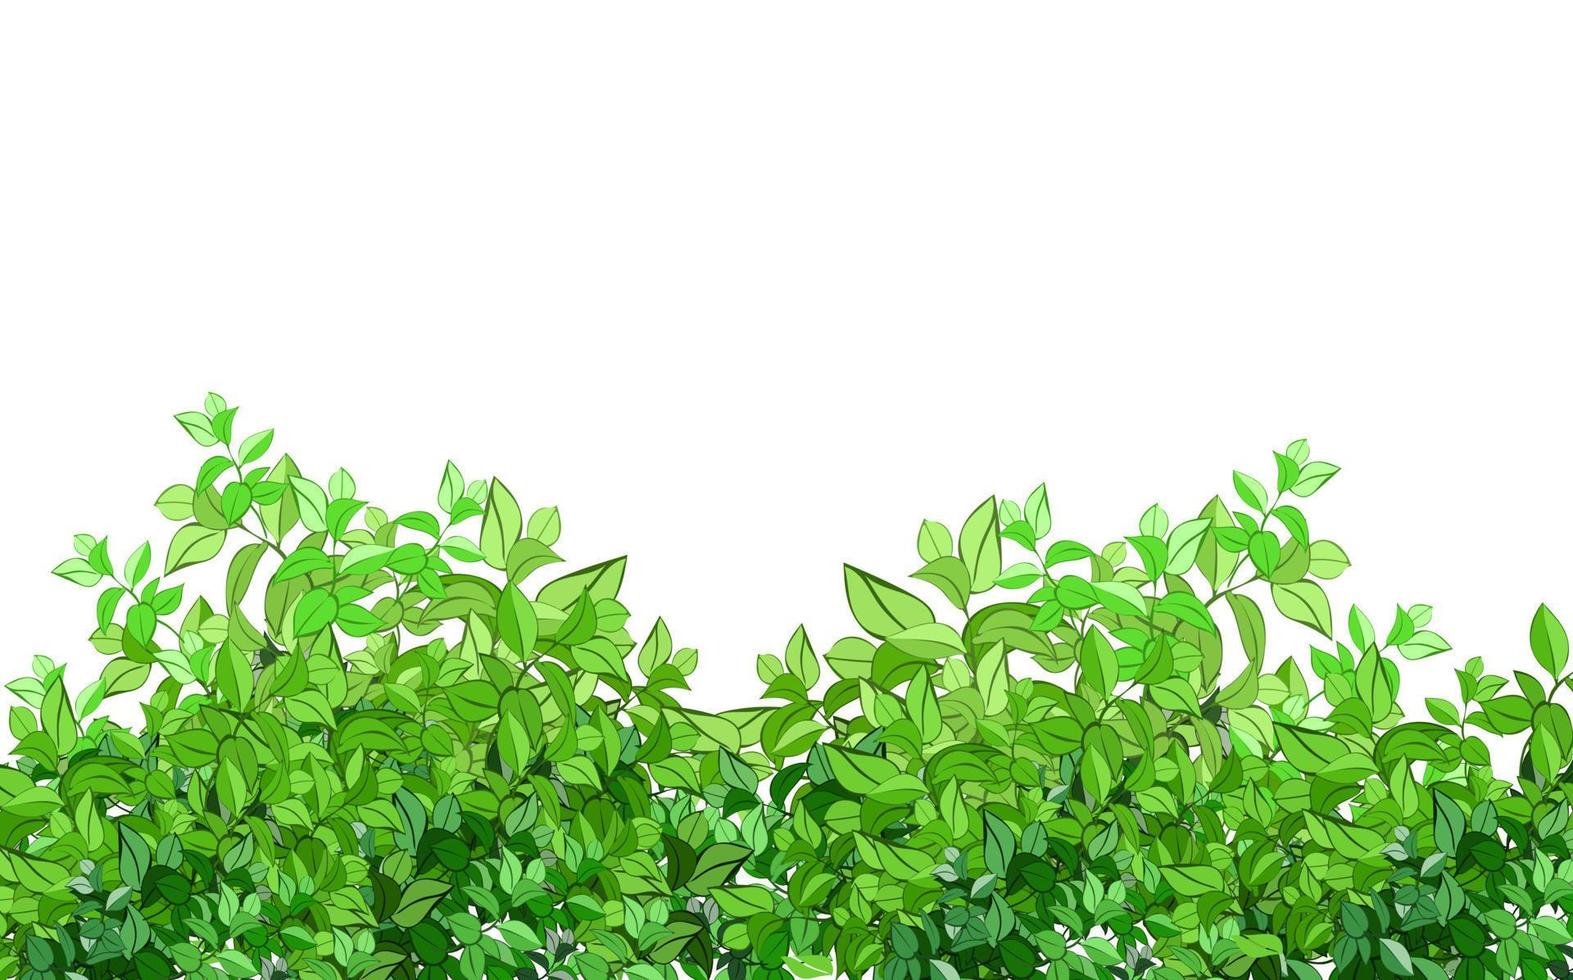 conjunto de planta verde ornamental na forma de um arbusto de jardim hedge.realistic, arbusto sazonal, buxo, folhagem de arbusto de coroa de árvore. vetor